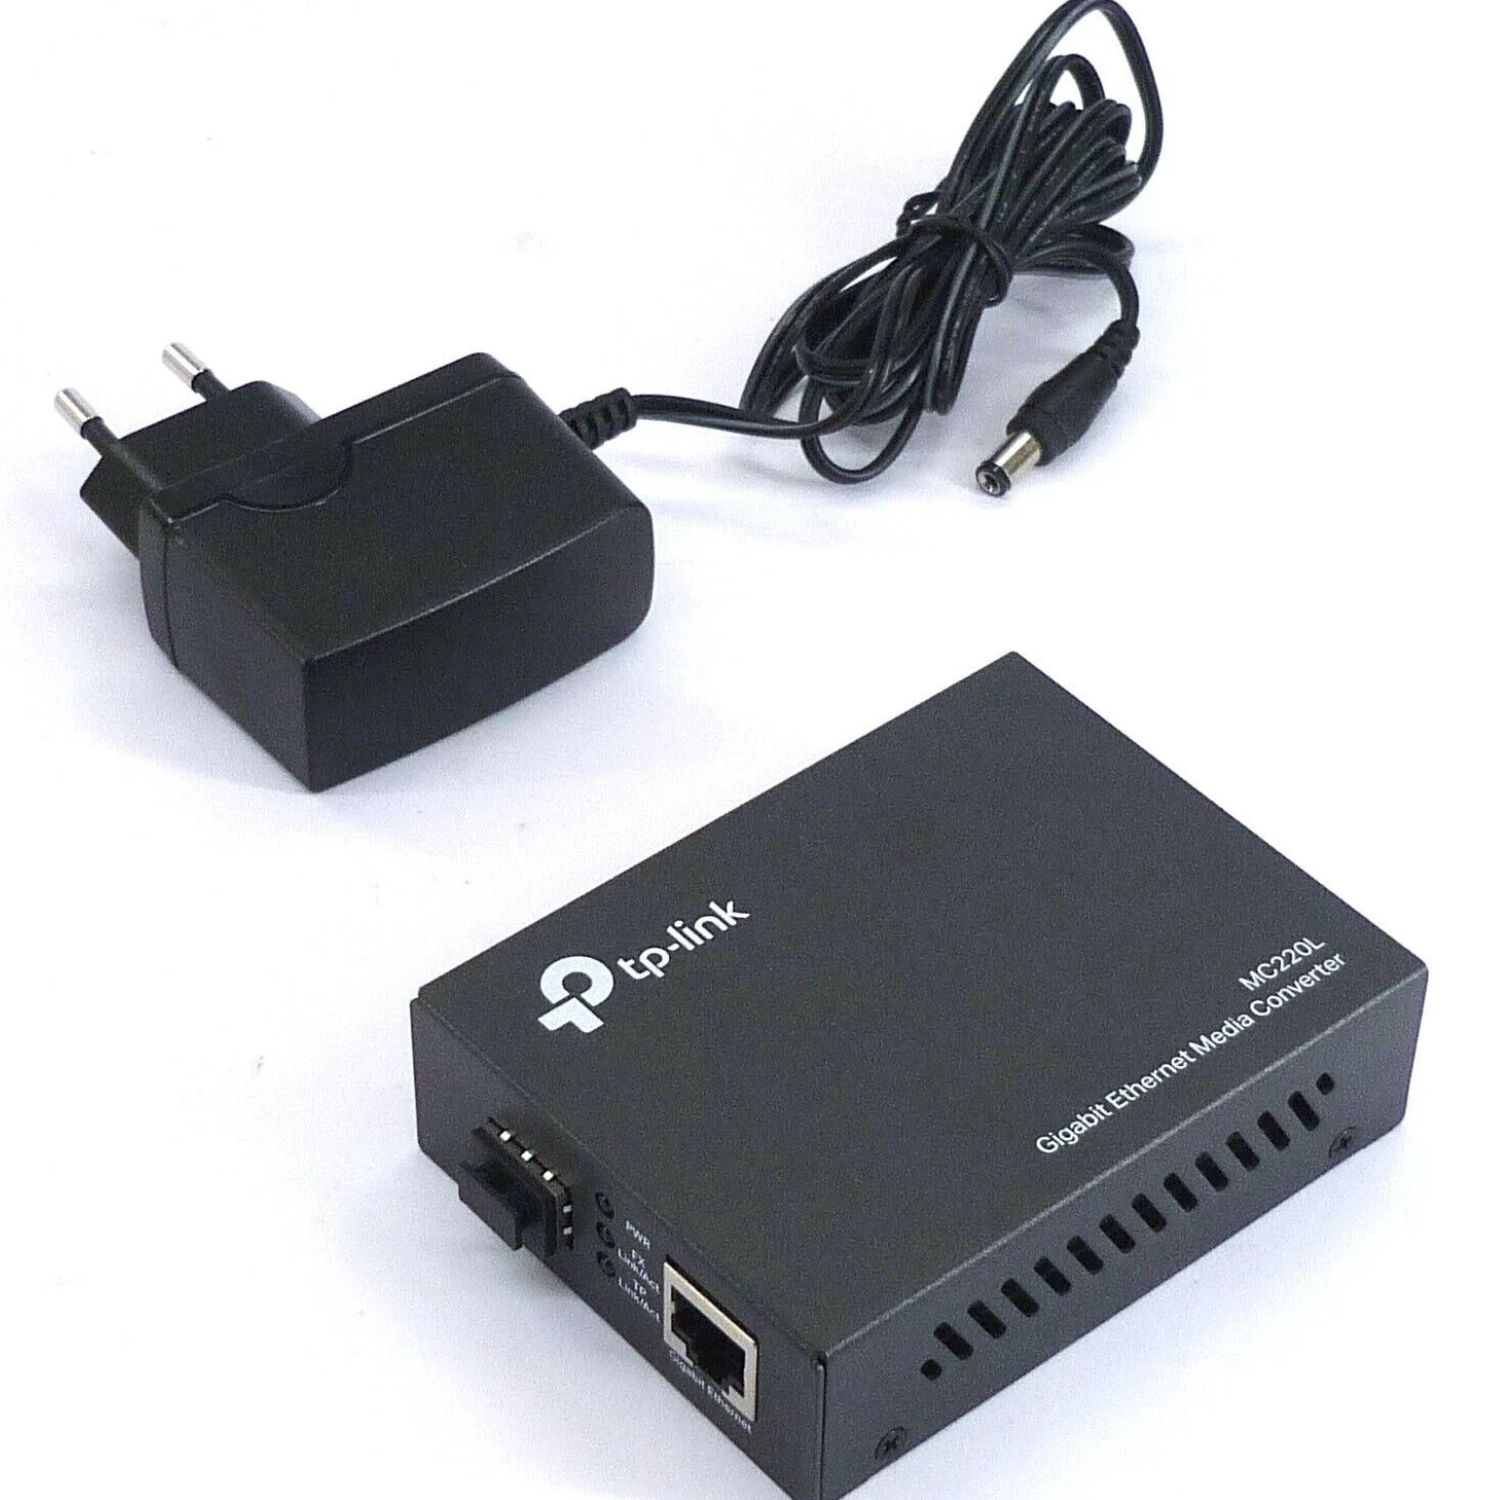 TP-Link MC220L Gigabit Single  Multi-Mode SFP Media Converter – IEEE 802.3ab/802.3z, 0.55km Multi-mode, 10km Single-Mode